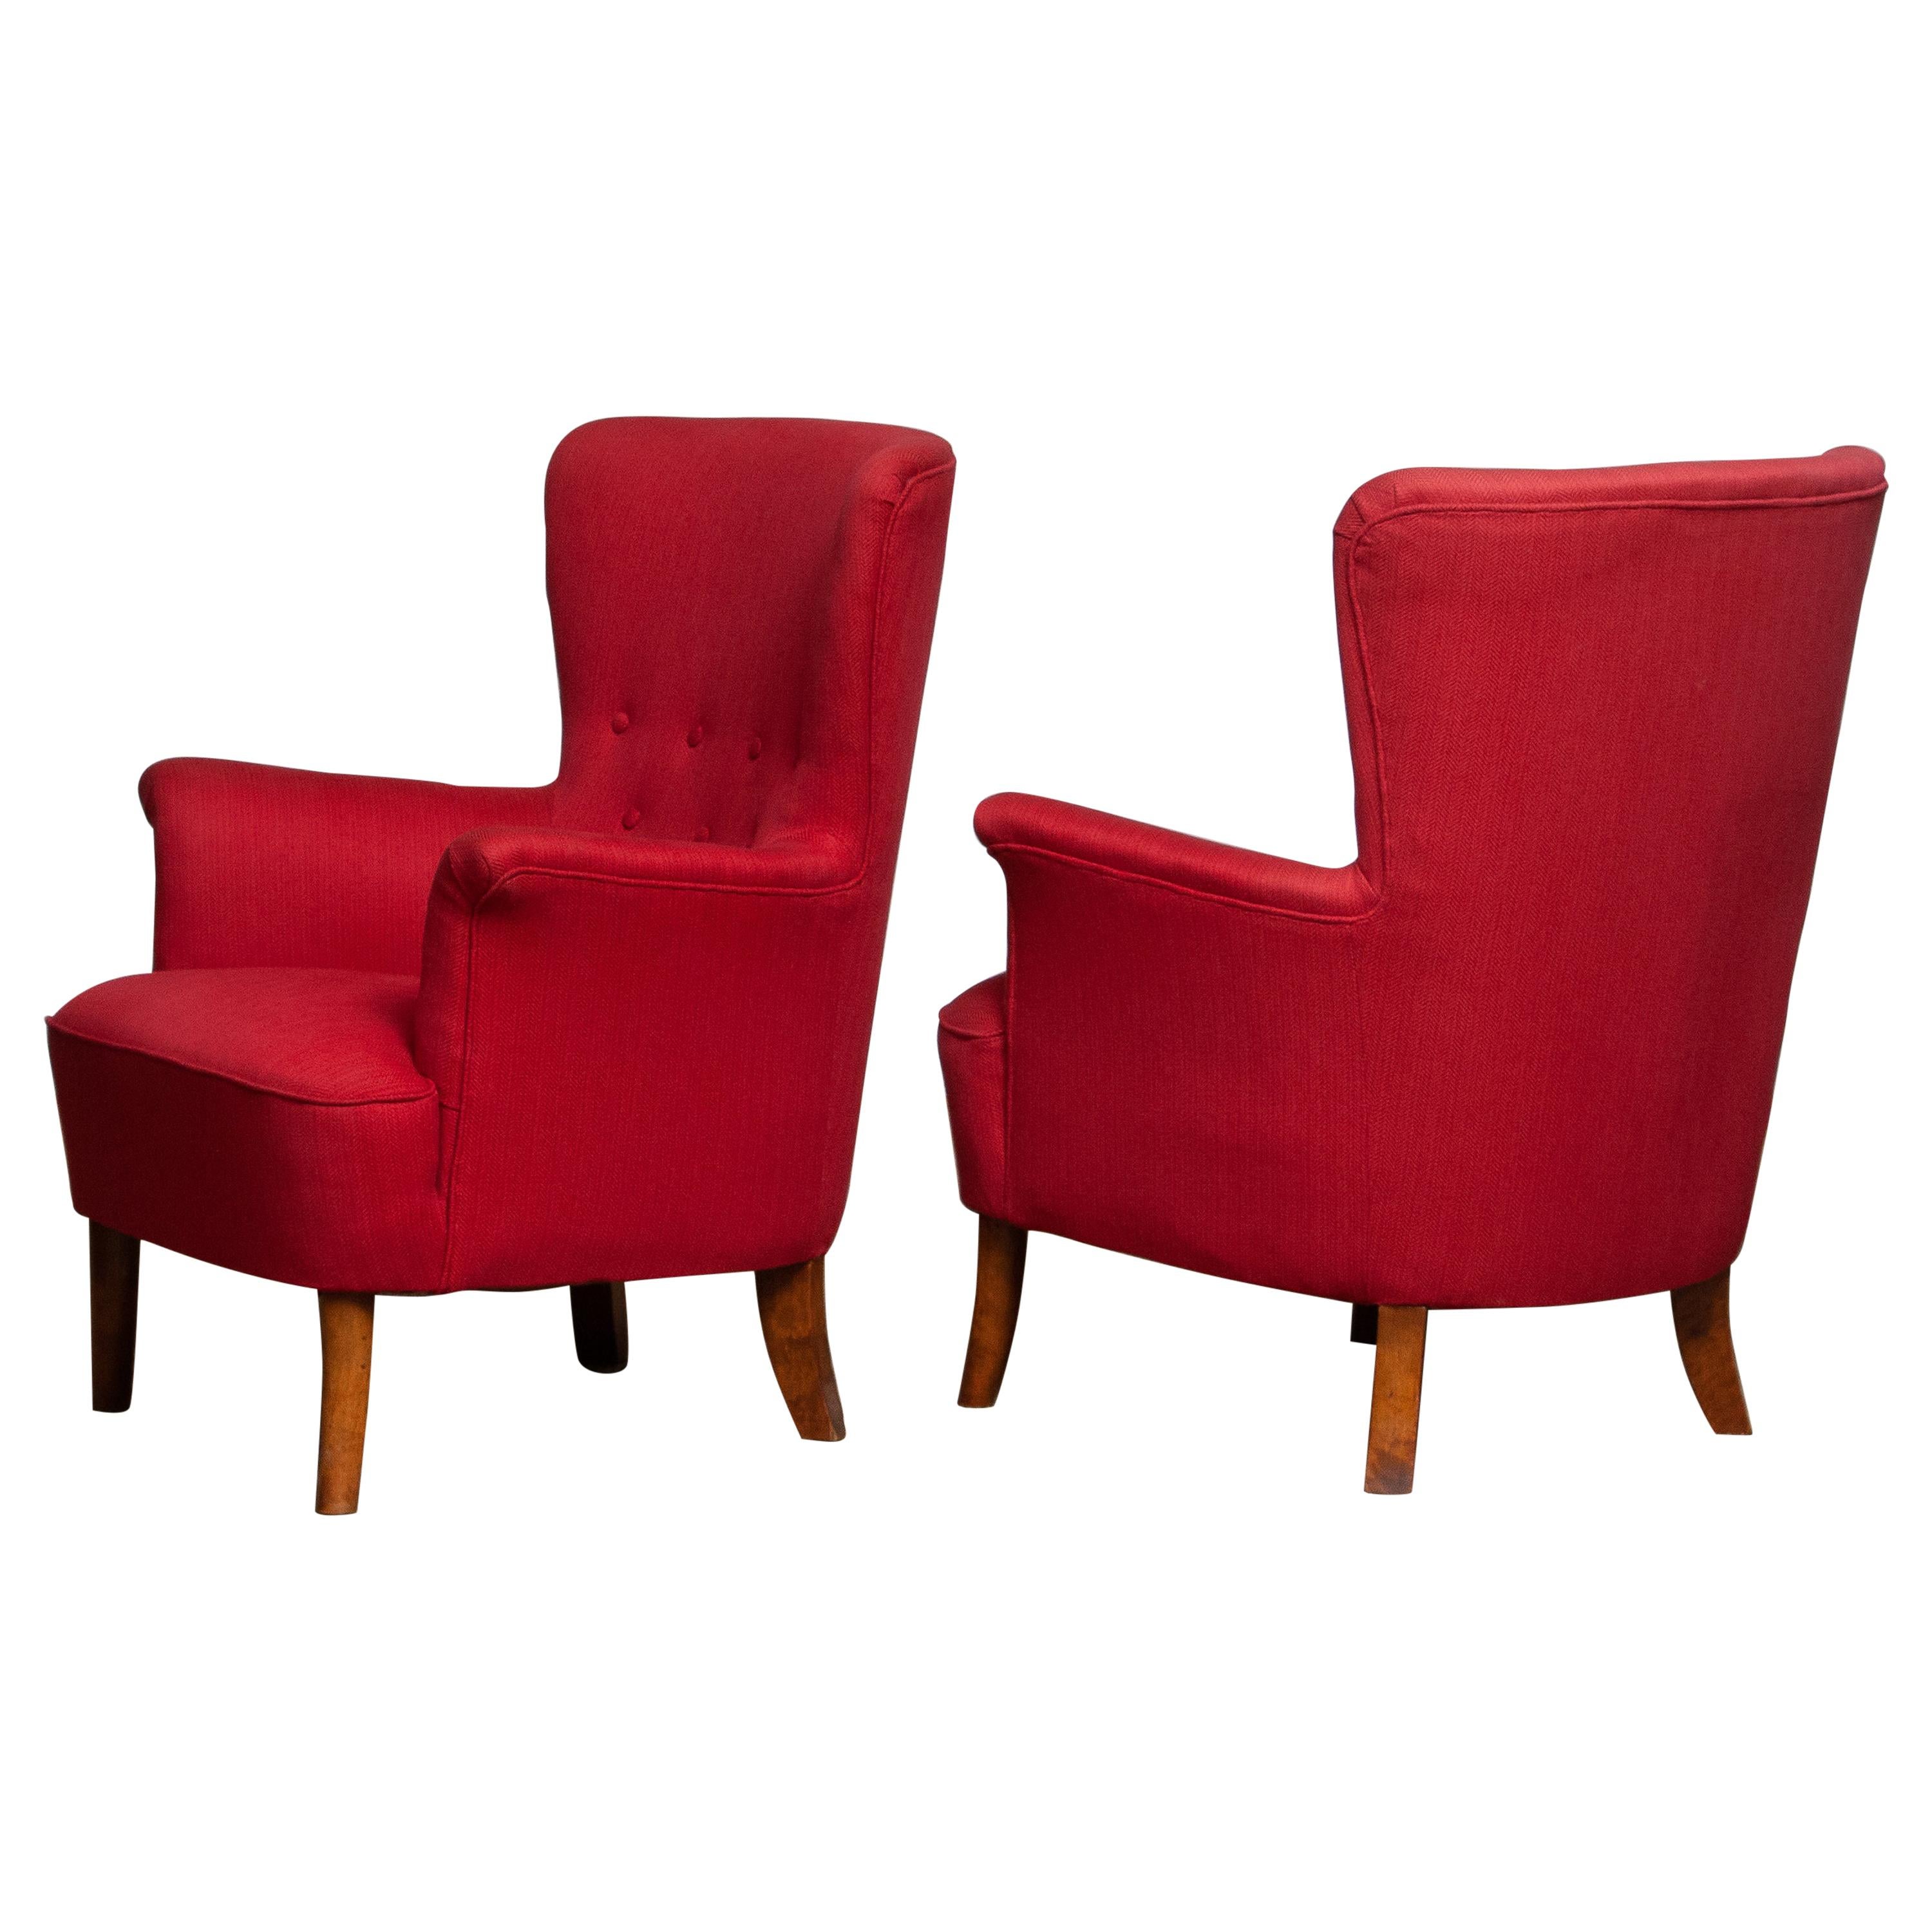 Mid-Century Modern 1940s, Pair of Fuchsia Easy or Lounge Chair by Carl Malmsten for Oh Sjögren